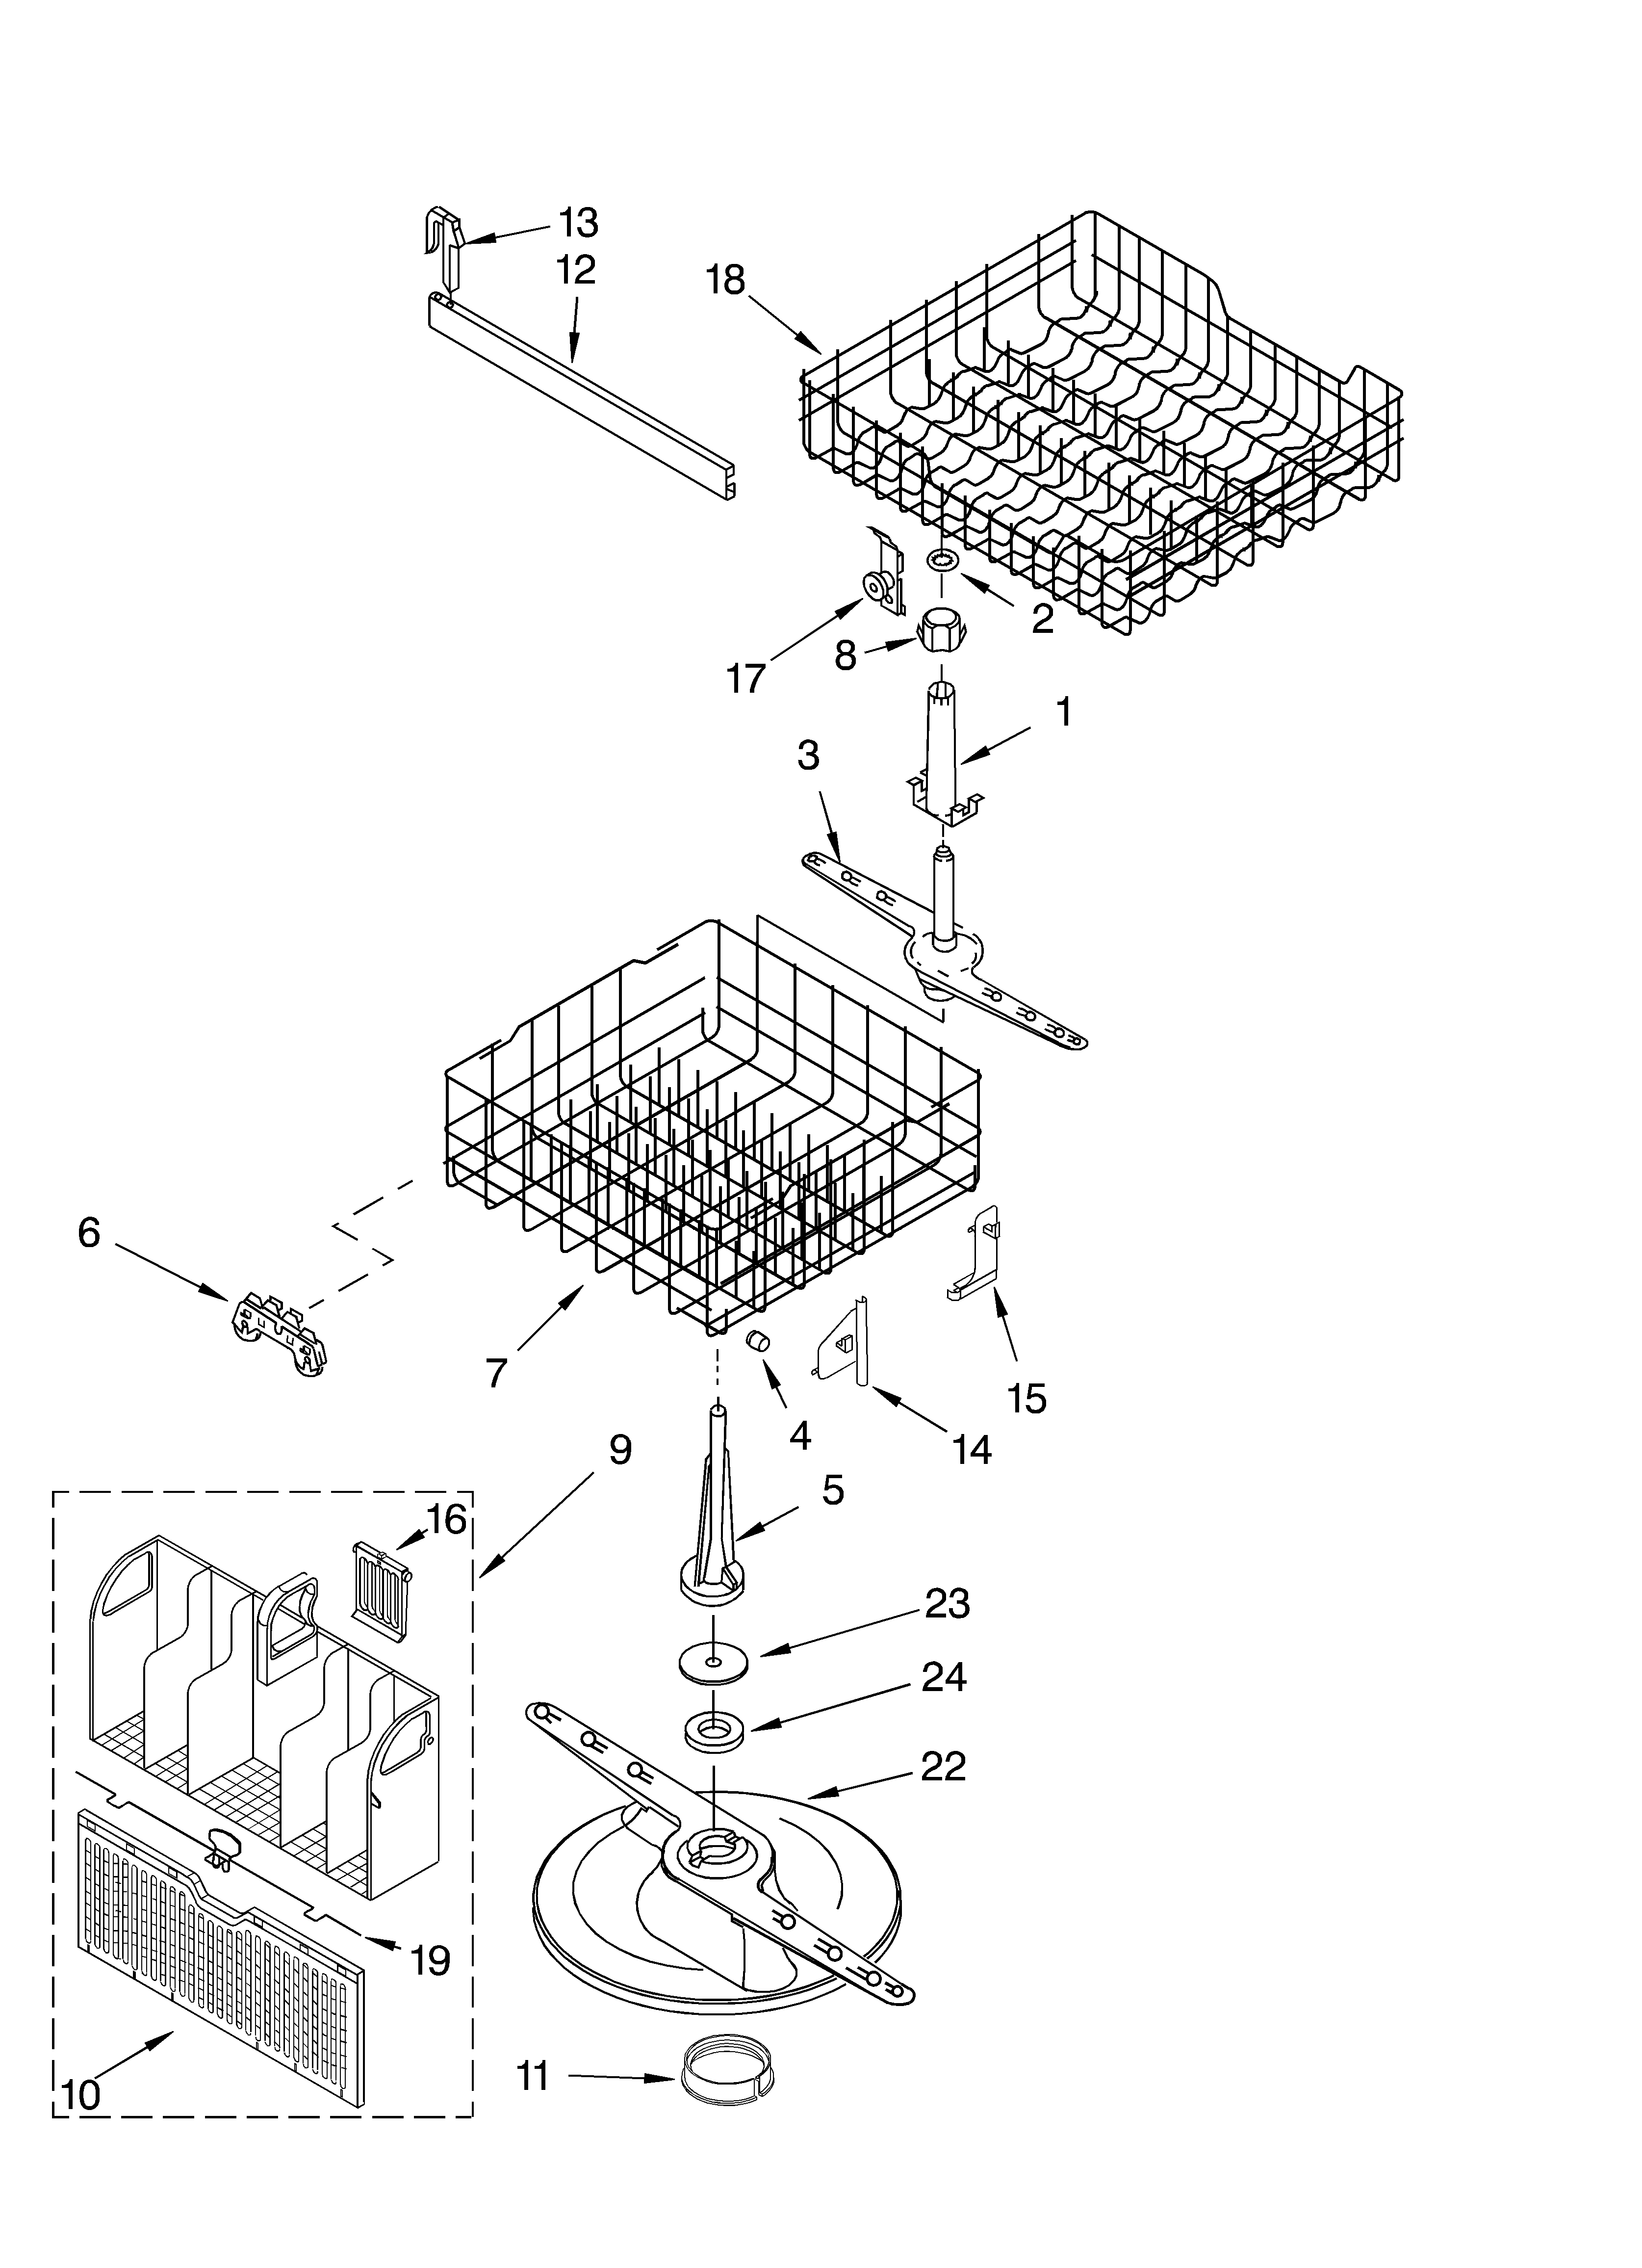 Whirlpool Dishwasher Parts Diagram - General Wiring Diagram